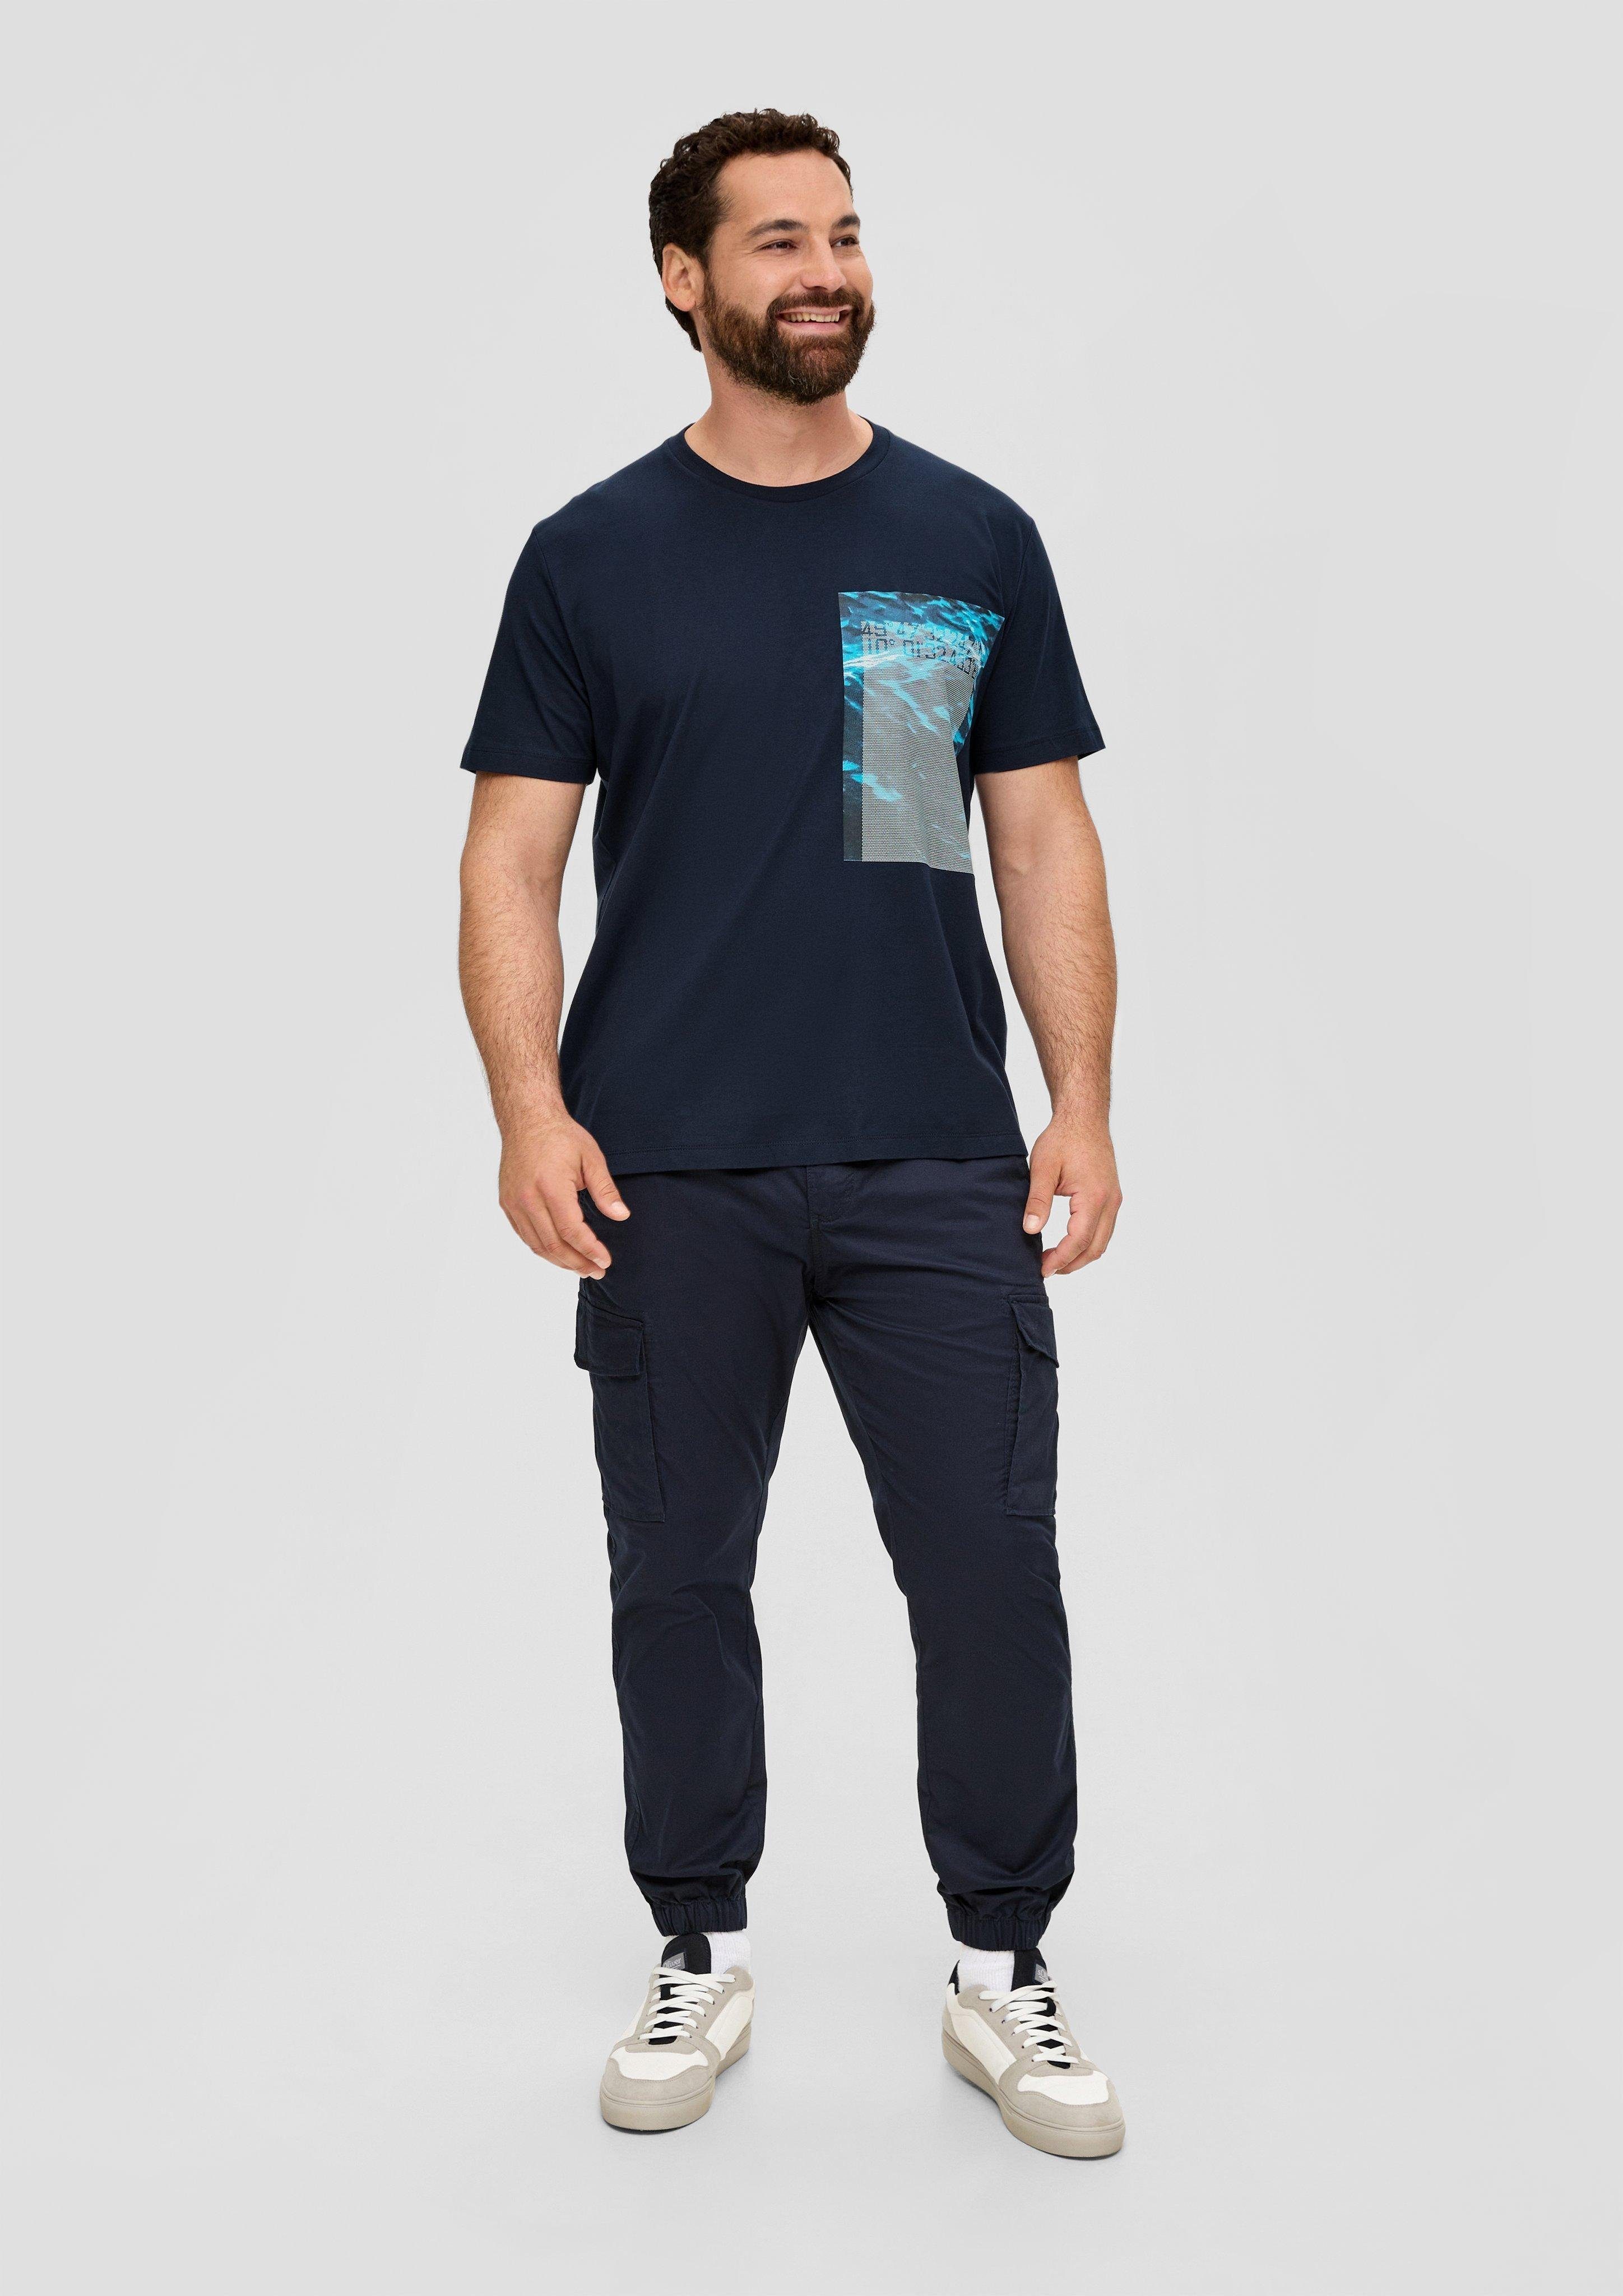 s.Oliver Kurzarmshirt navy T-Shirt aus Baumwollstretch